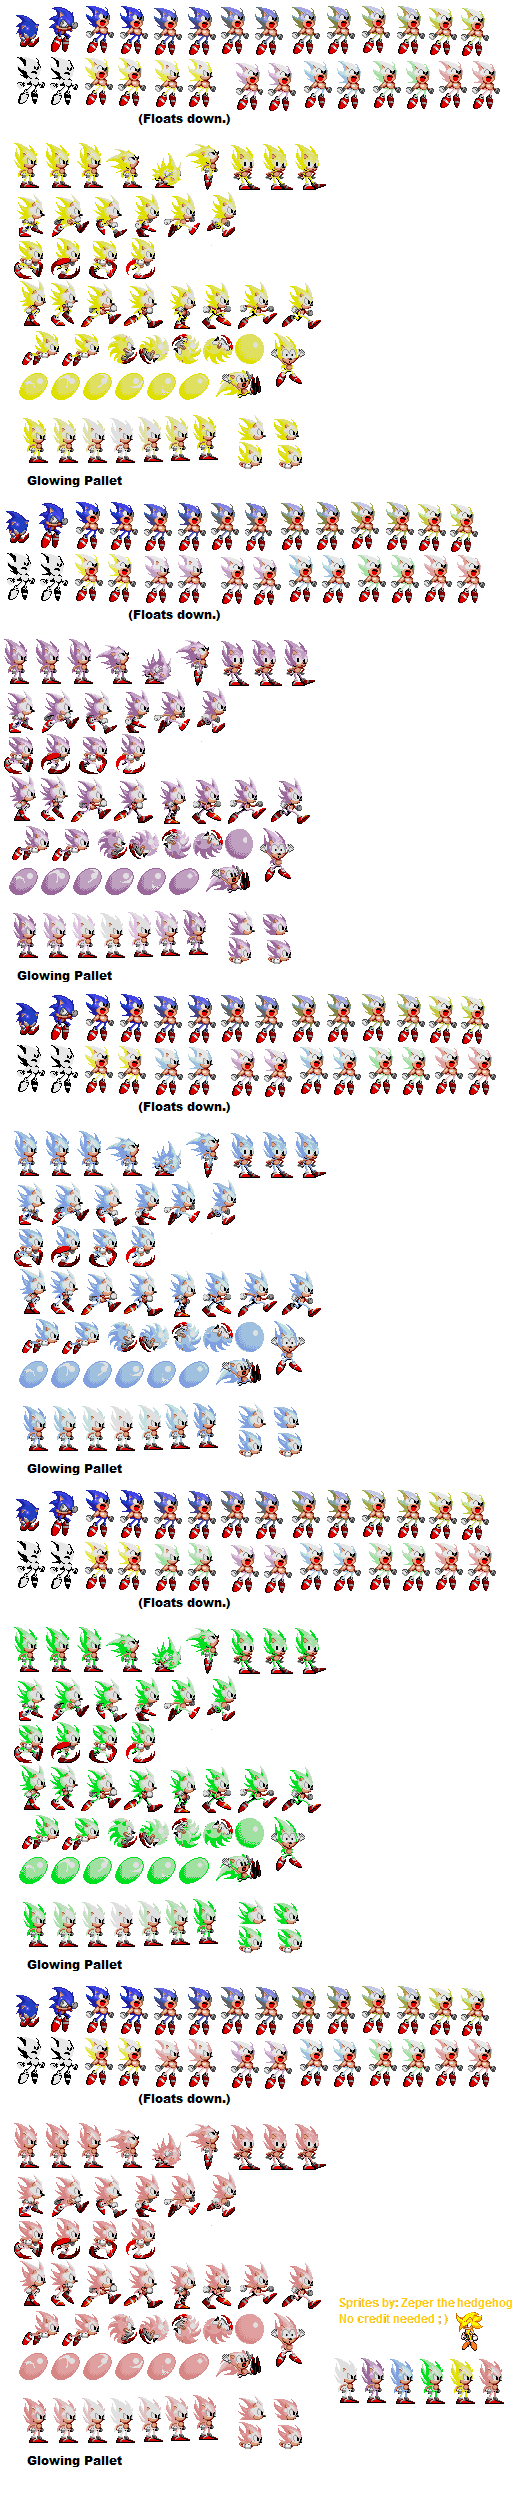 Custom Hyper Sonic Sprites By Zeperthehedgehog44 On Deviantart